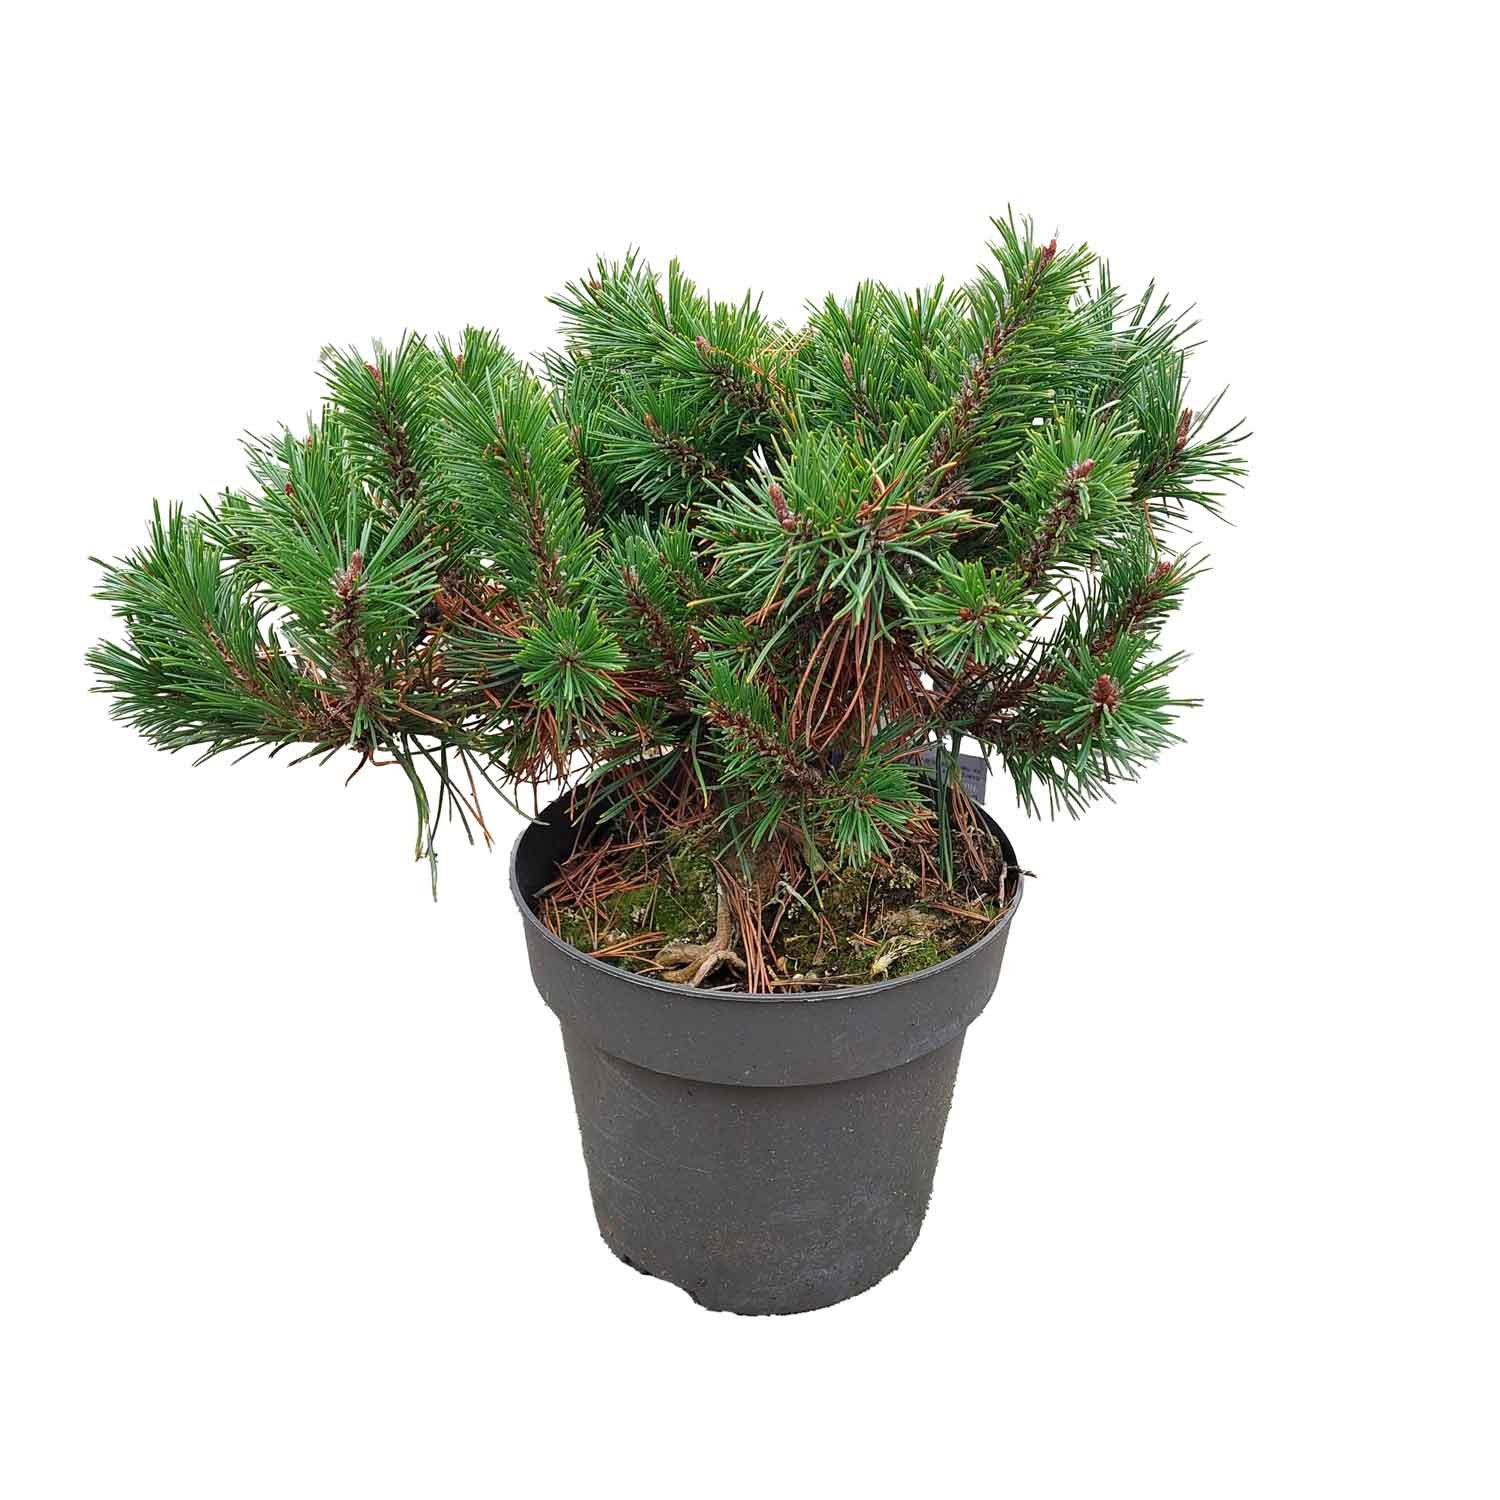 Dværgfyr - Pinus mugo 'Humpy' C 2,3